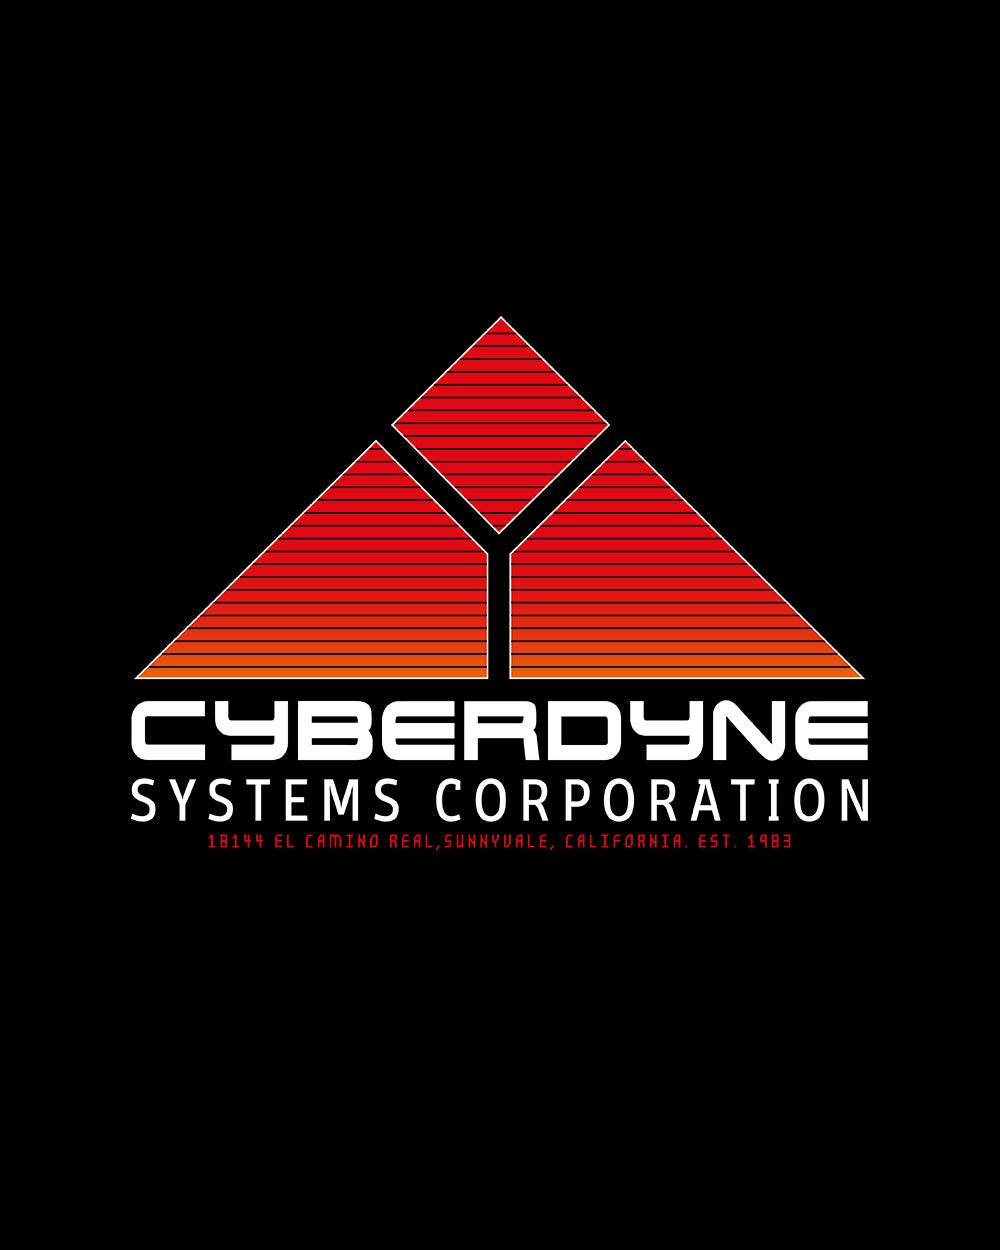 Cyberdyne T-Shirt Australia Online #colour_black